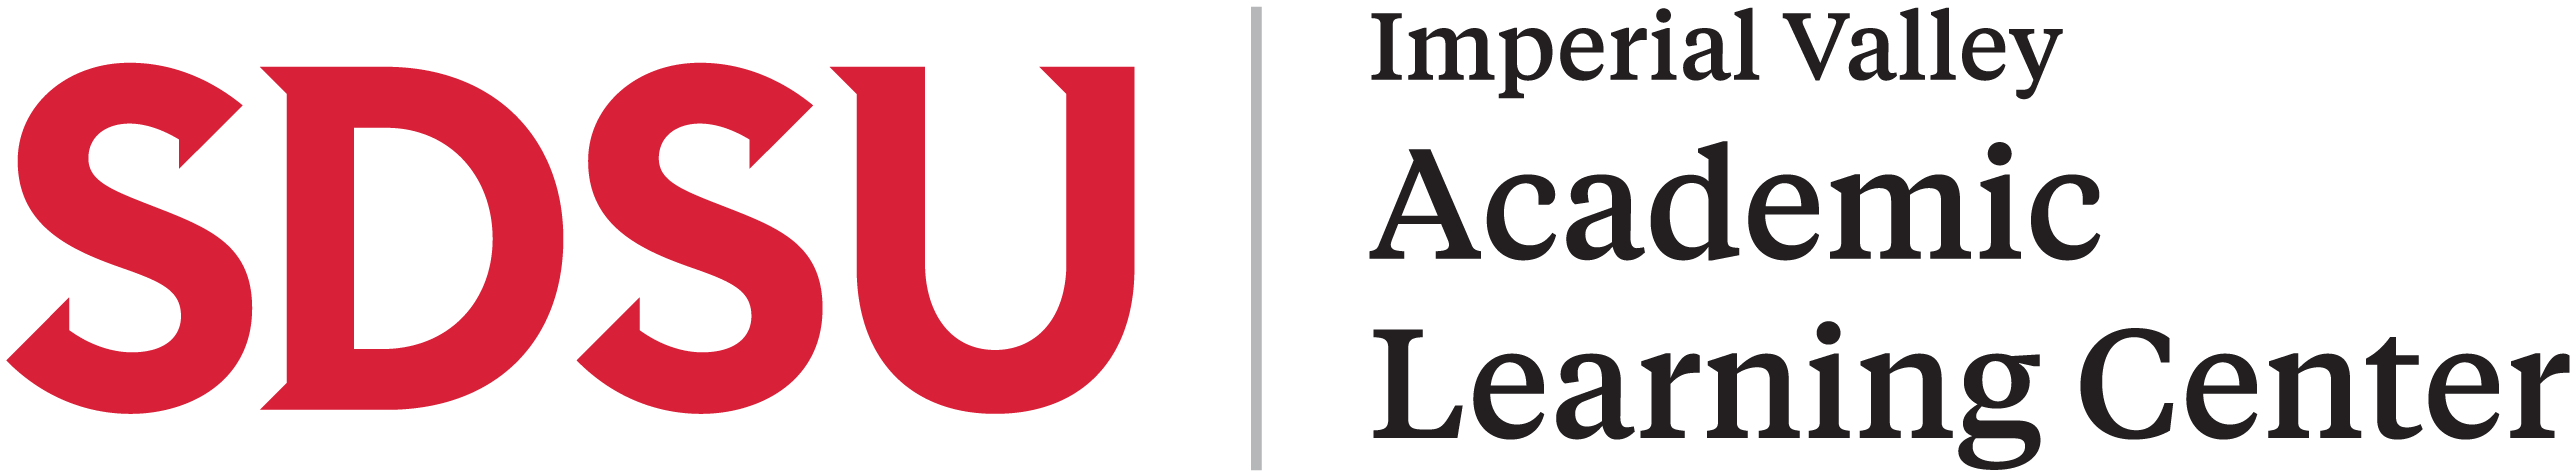 SDSU-IV Academic Learning Center Logo